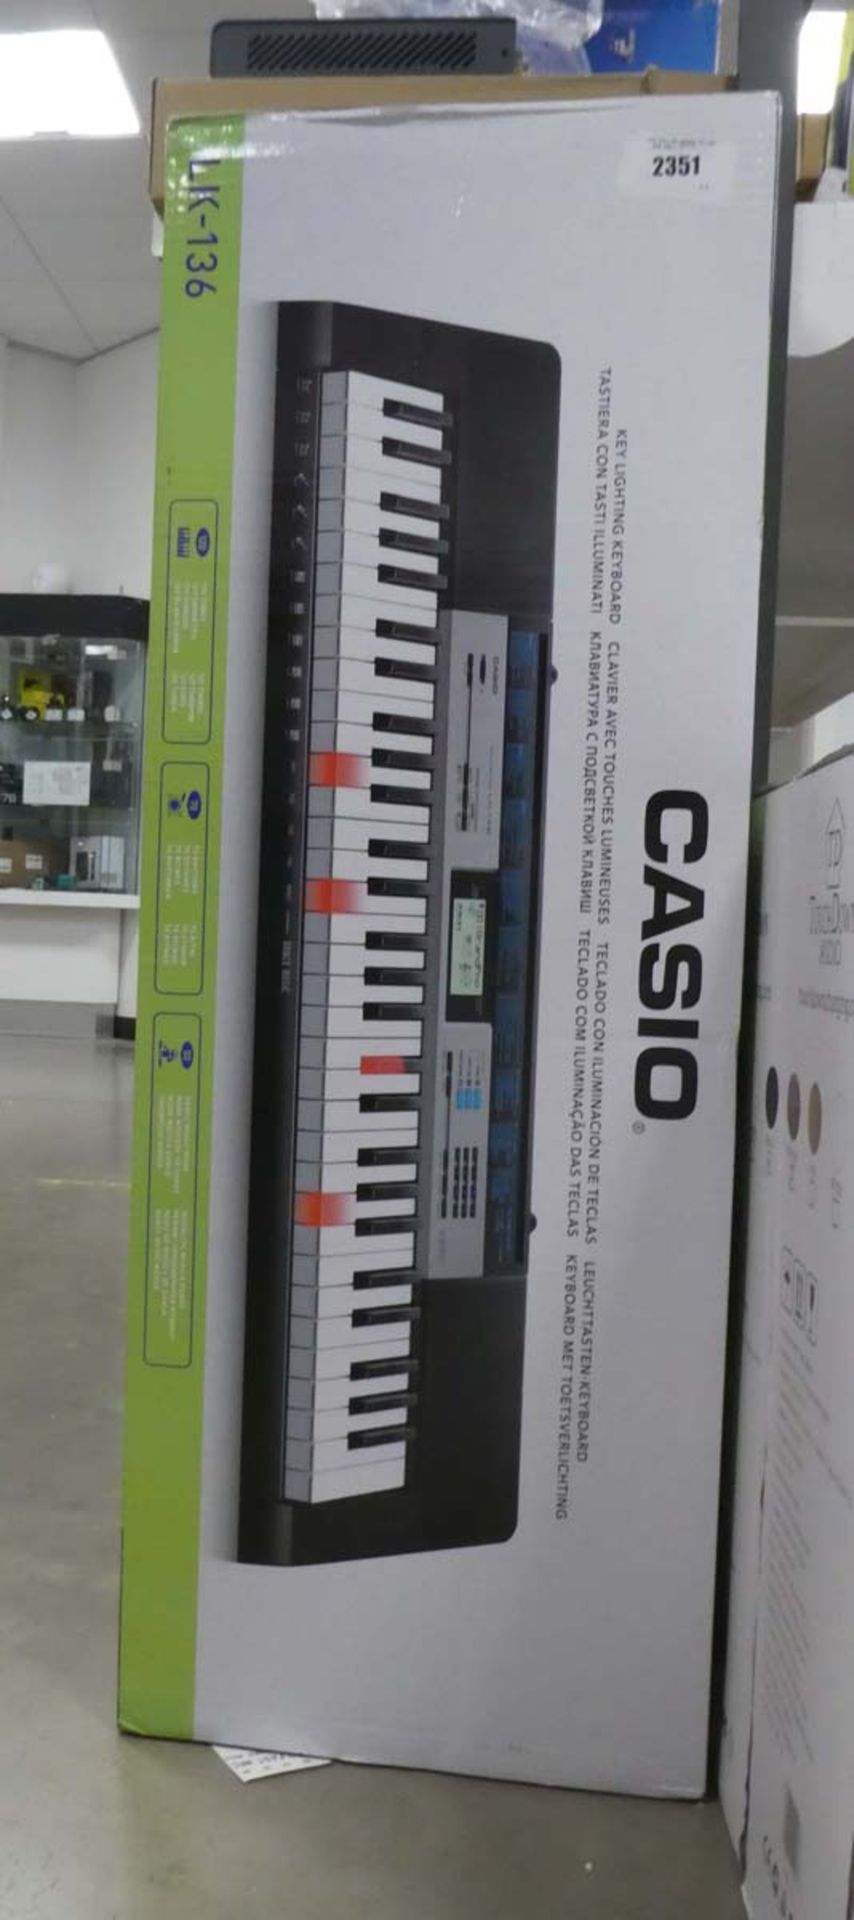 Casio LK136 keyboard and box